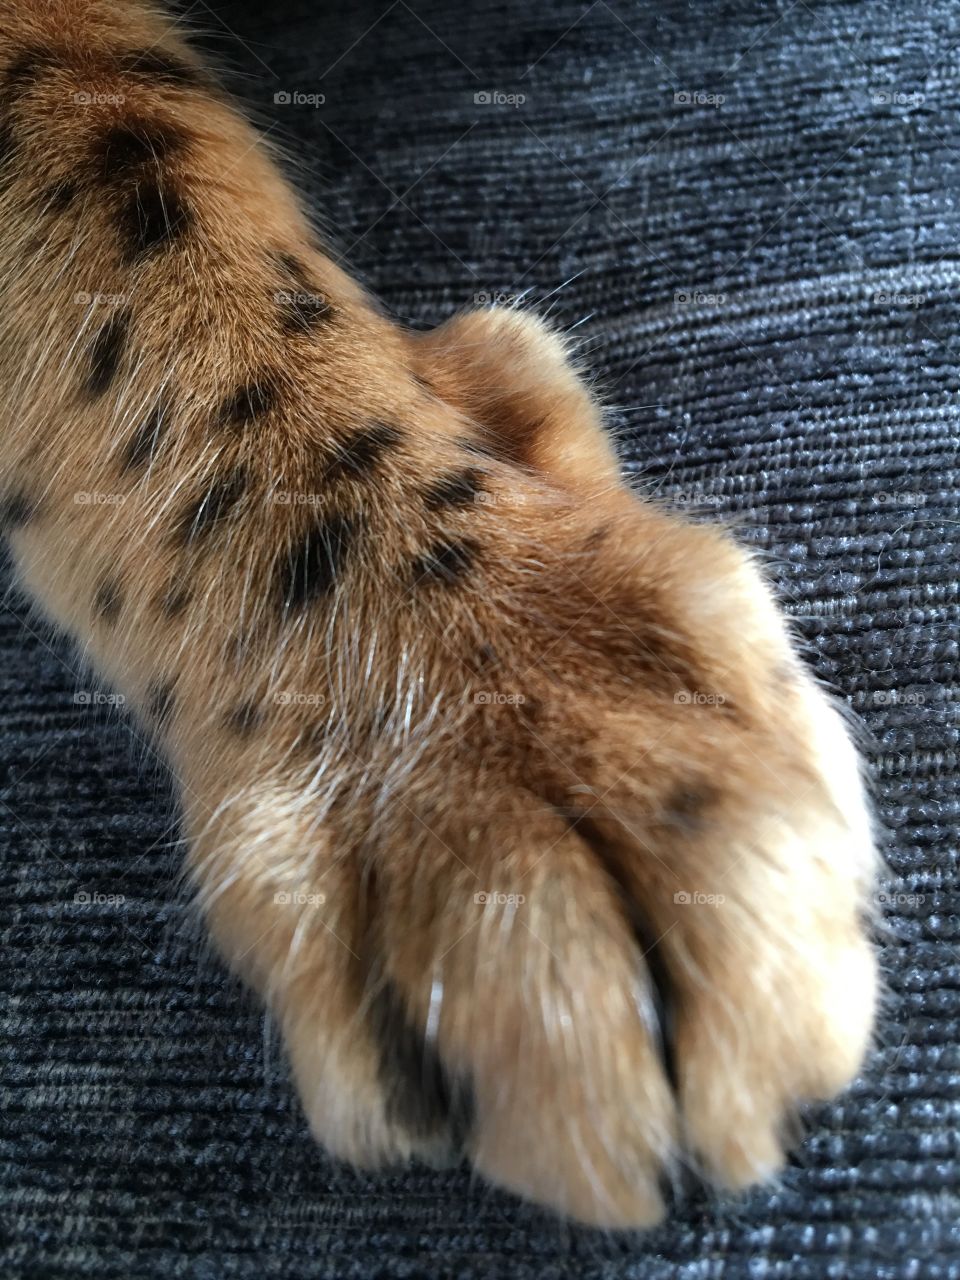 Bengal feet 😻😻 love my boy paws! 